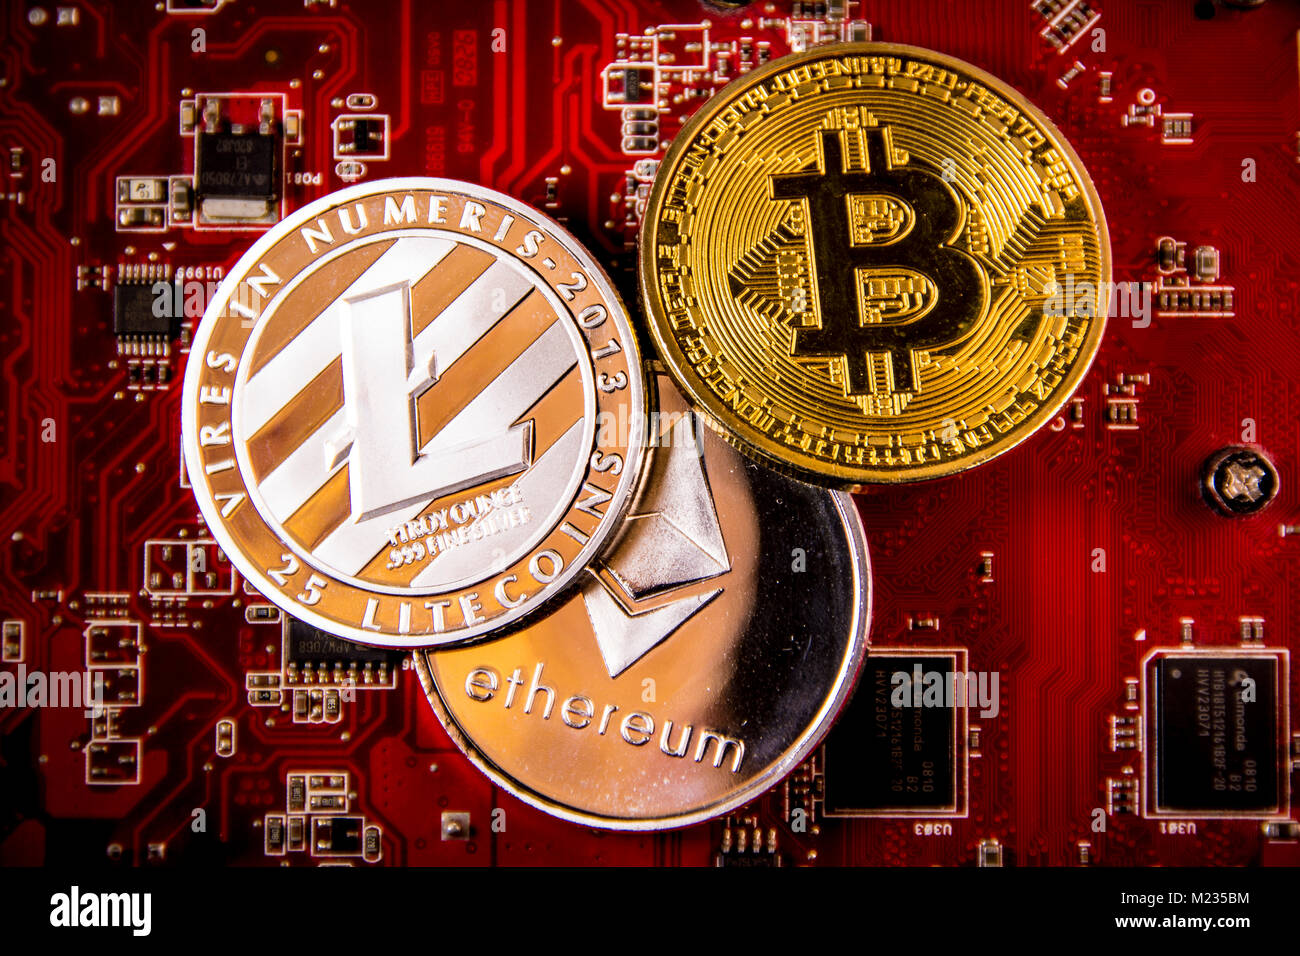 Bitcoin ethereum litecoin mining 0815 btc to usd